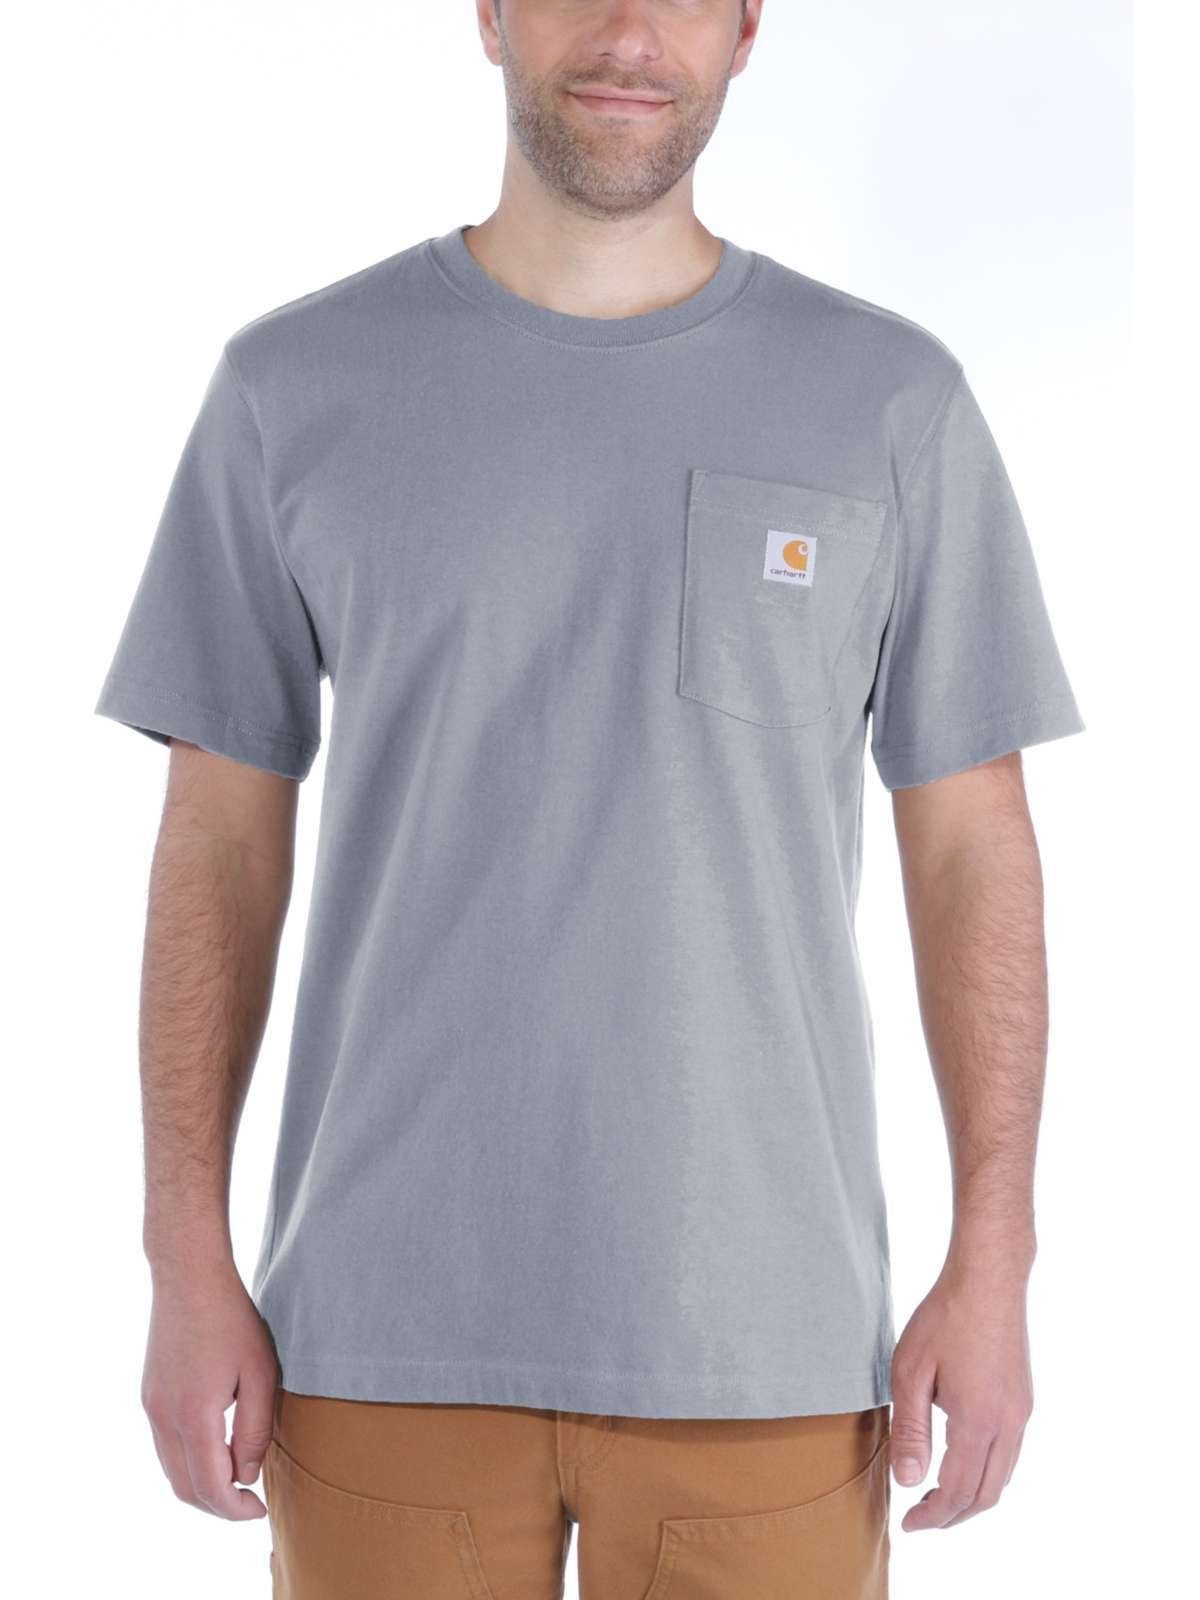 Carhartt Carhartt GREY T-Shirt grau HEATHER T-Shirt